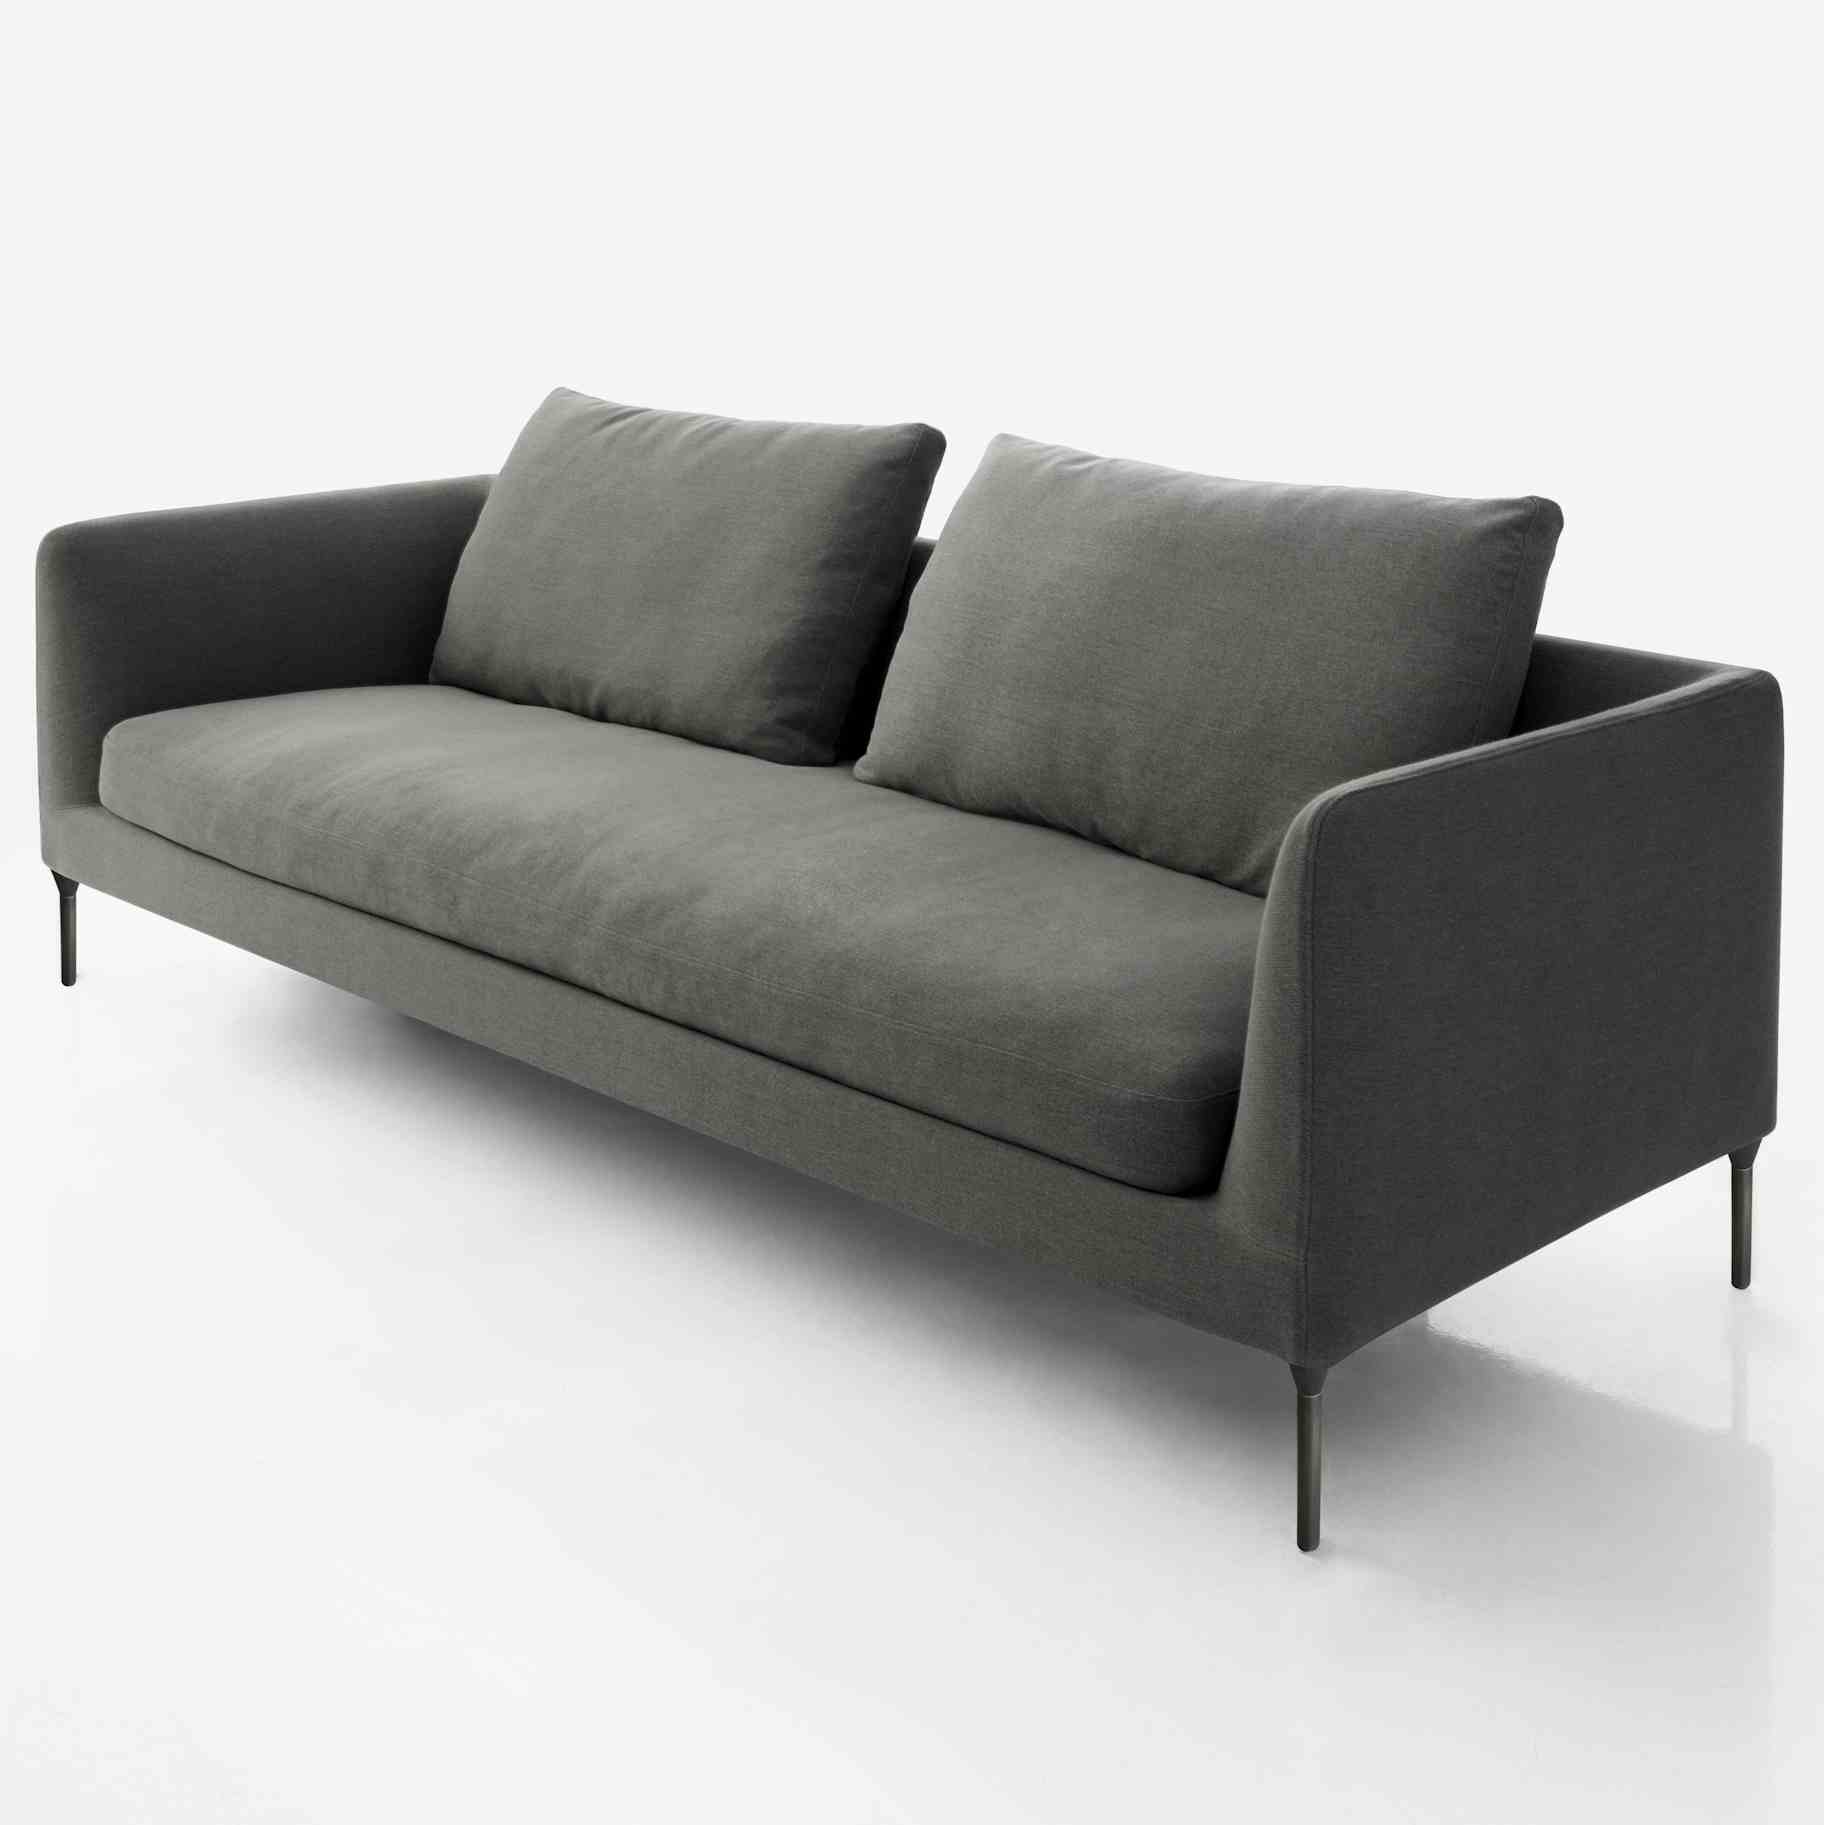 Bensen furniture delta sofa grey side haute living